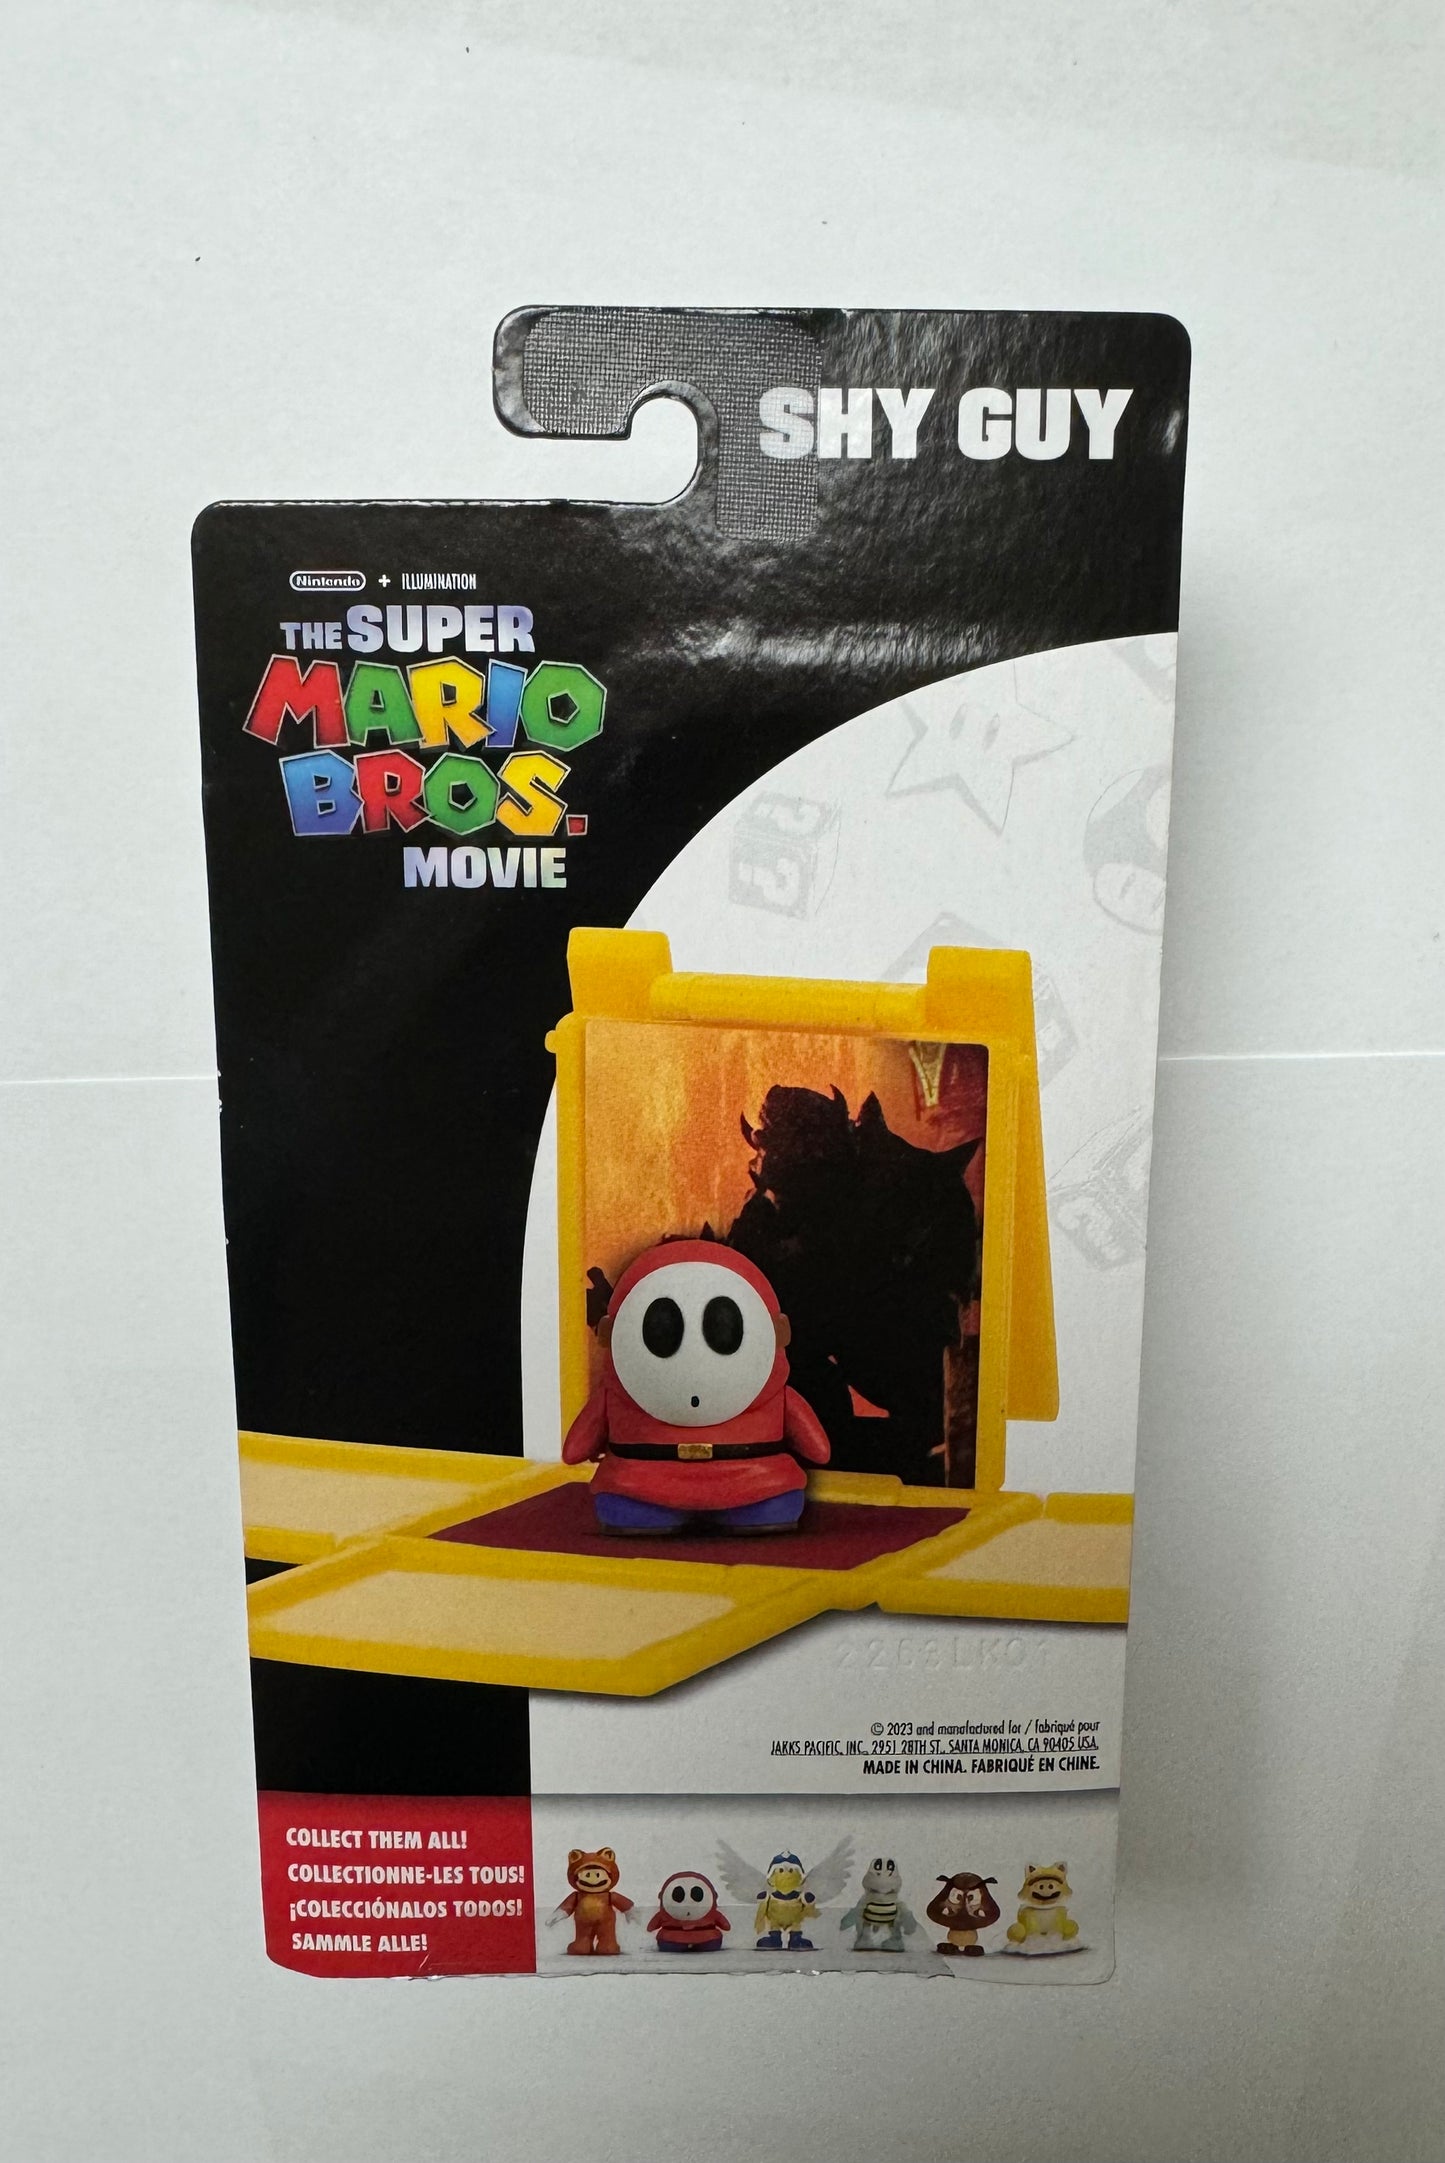 Jakks The Super Mario Bros. Movie Shy Guy Mini Figure